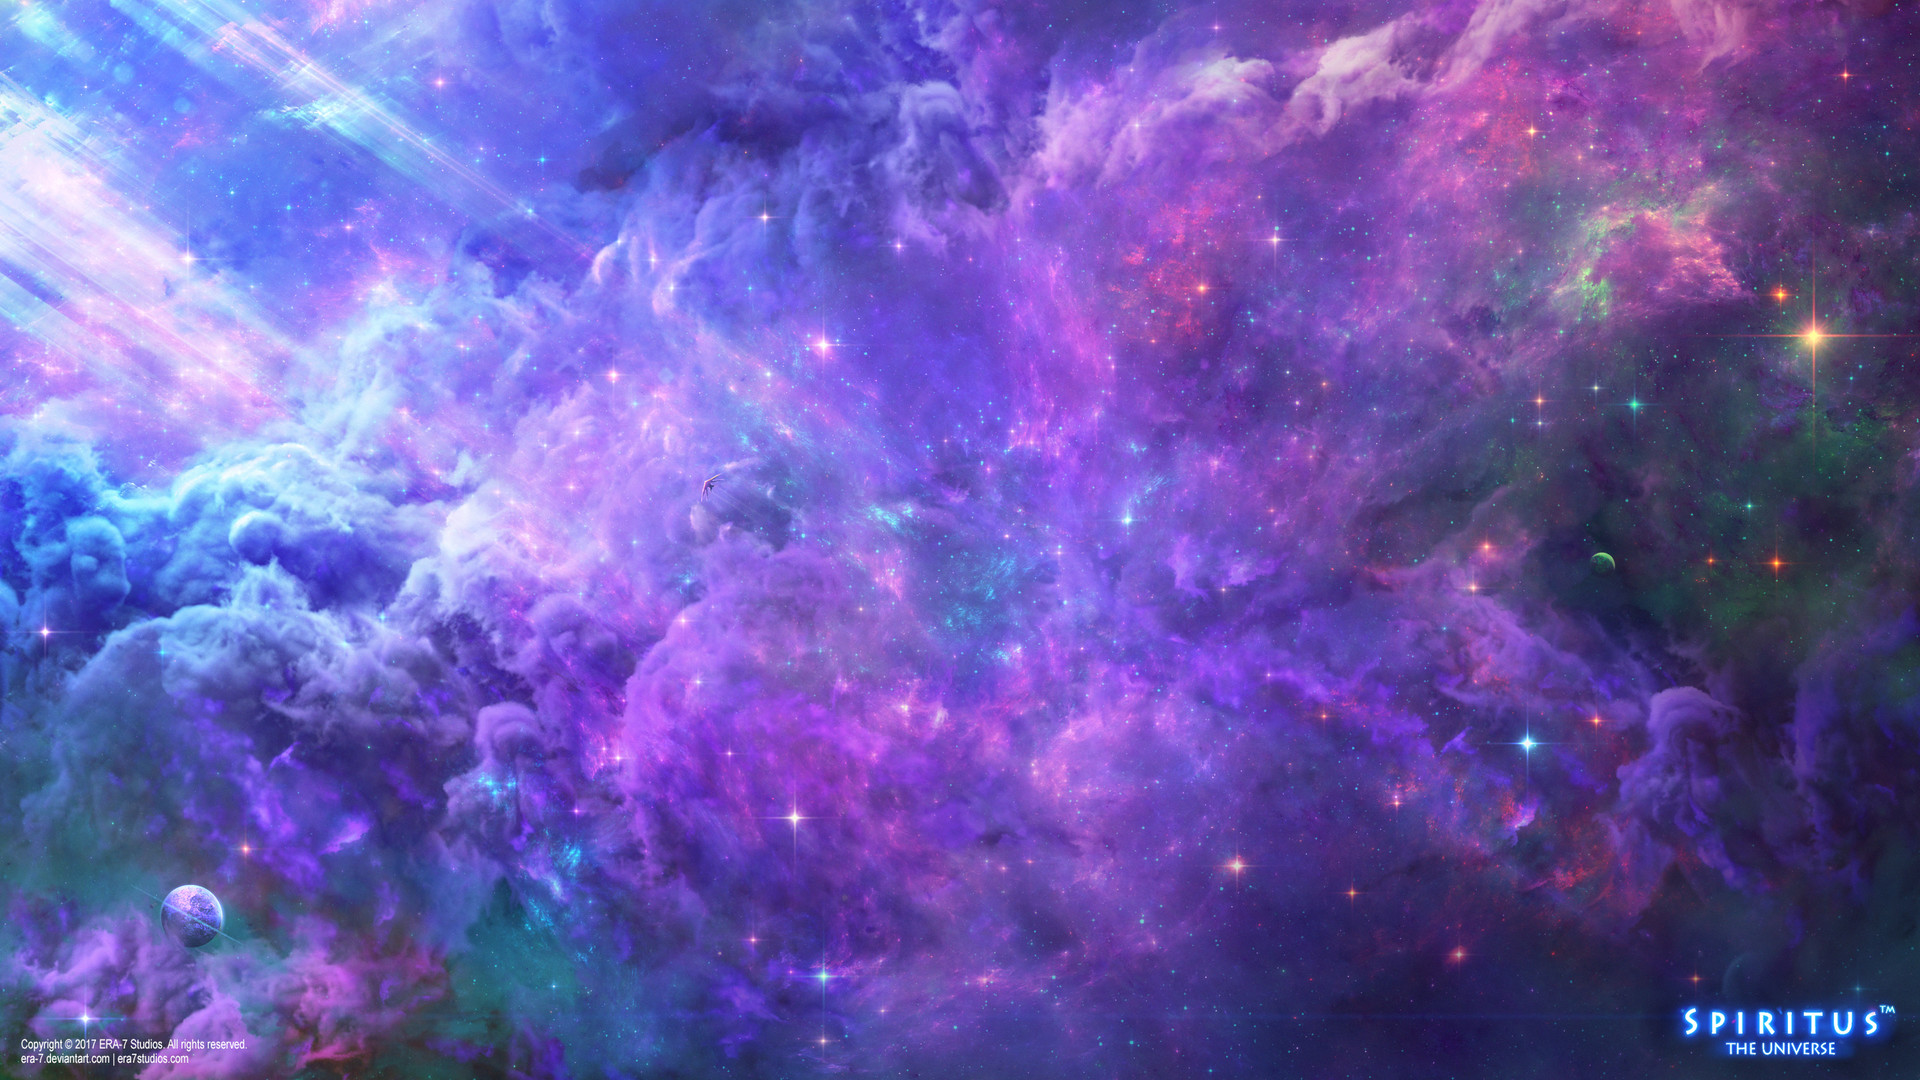 Yuliya Zabelina Digital Art Fantasy Art Space Nebula Clouds Planet Spiritus The Universe 1920x1080